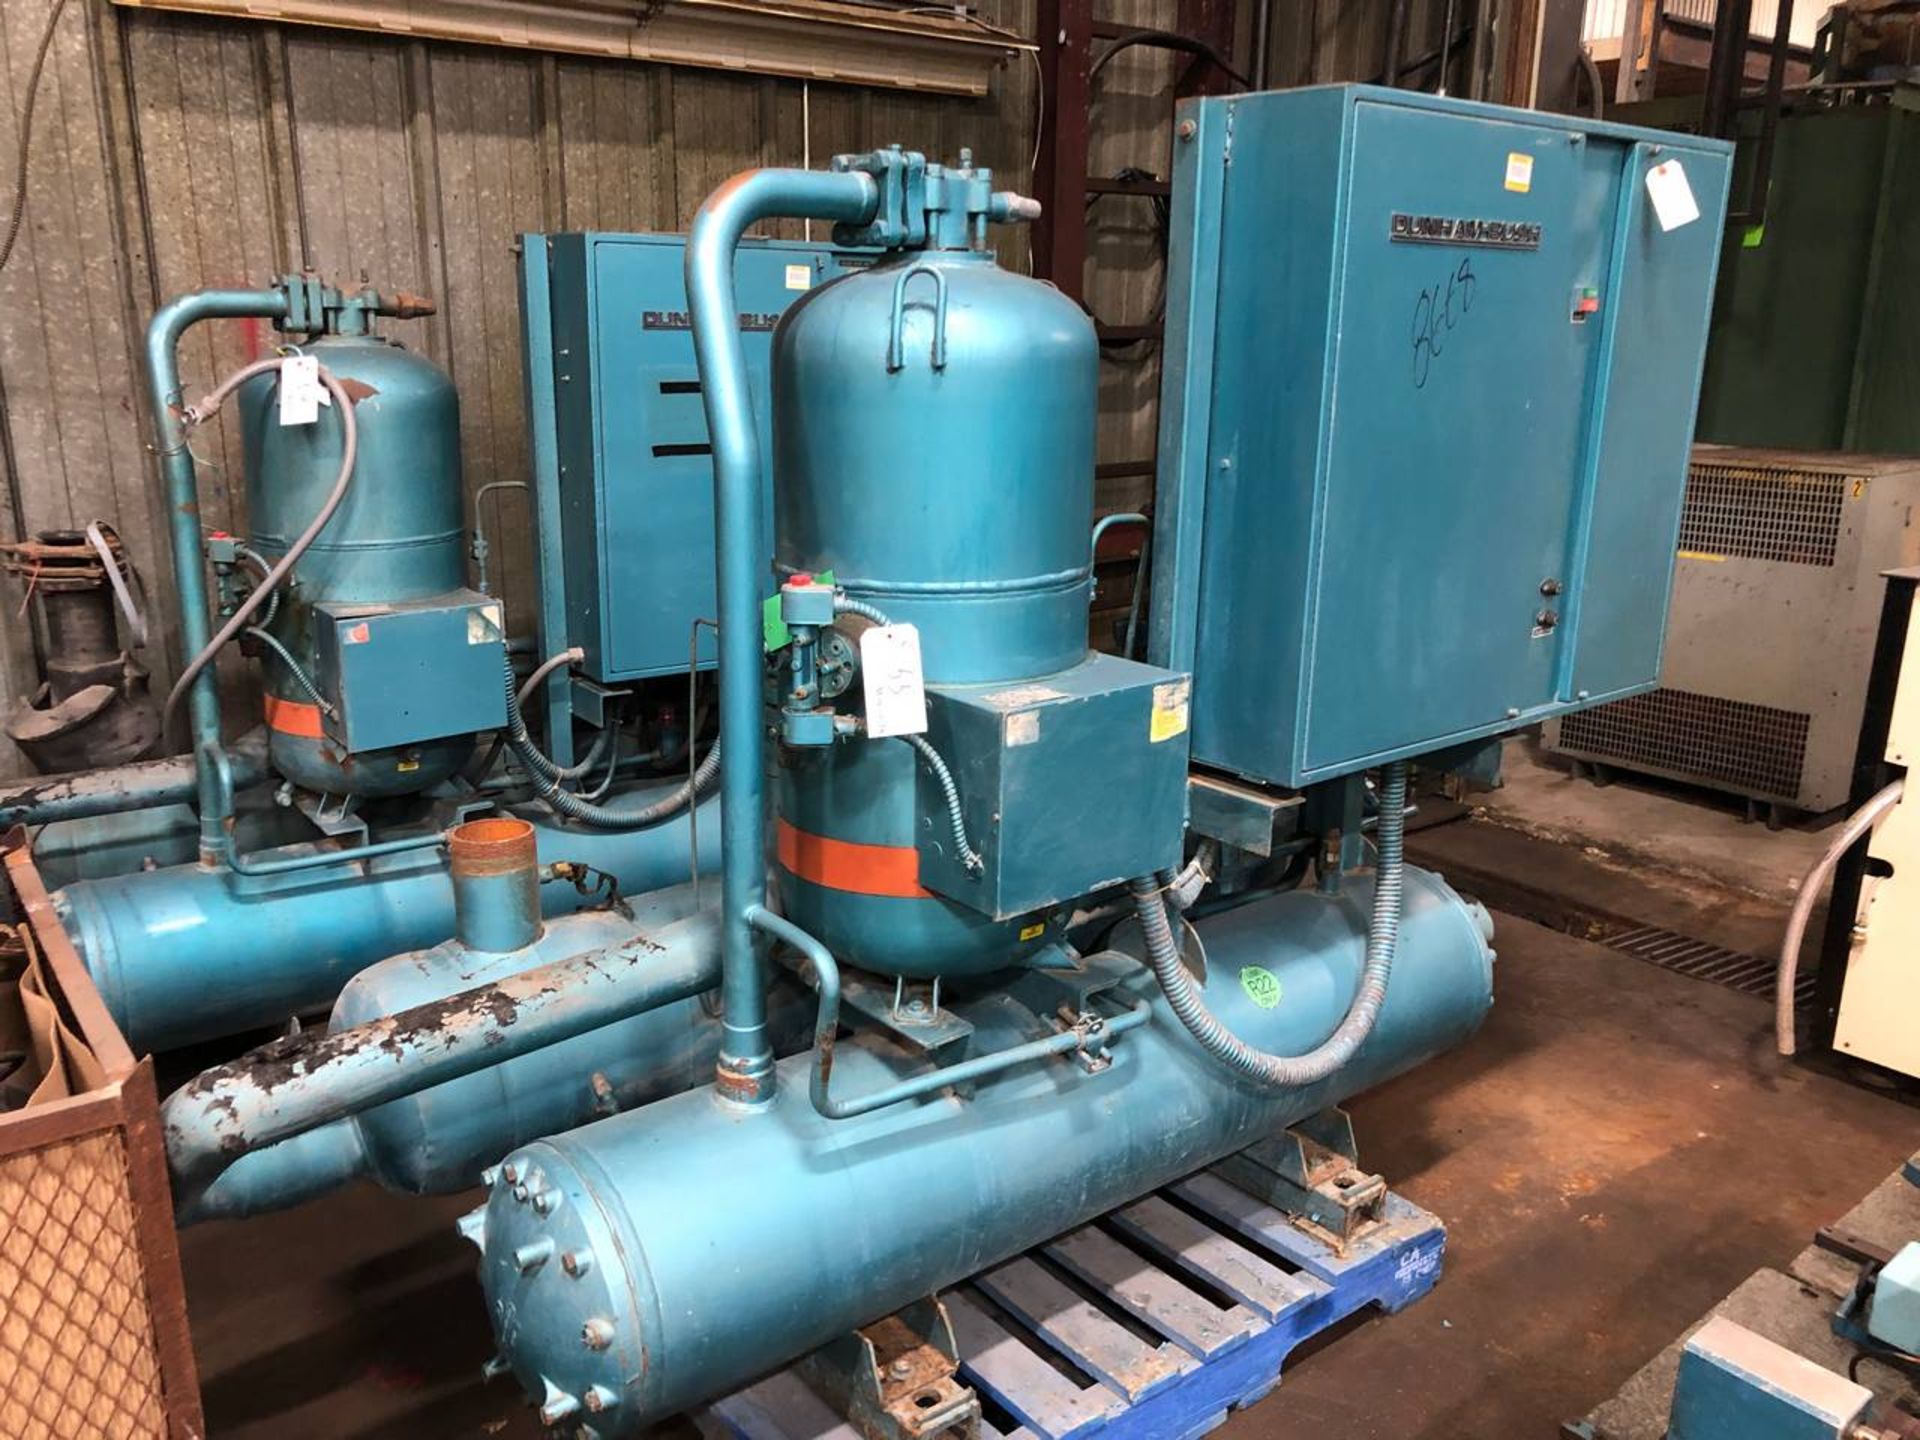 Dunham-Bush Refrigeration compressor For Water Cooling